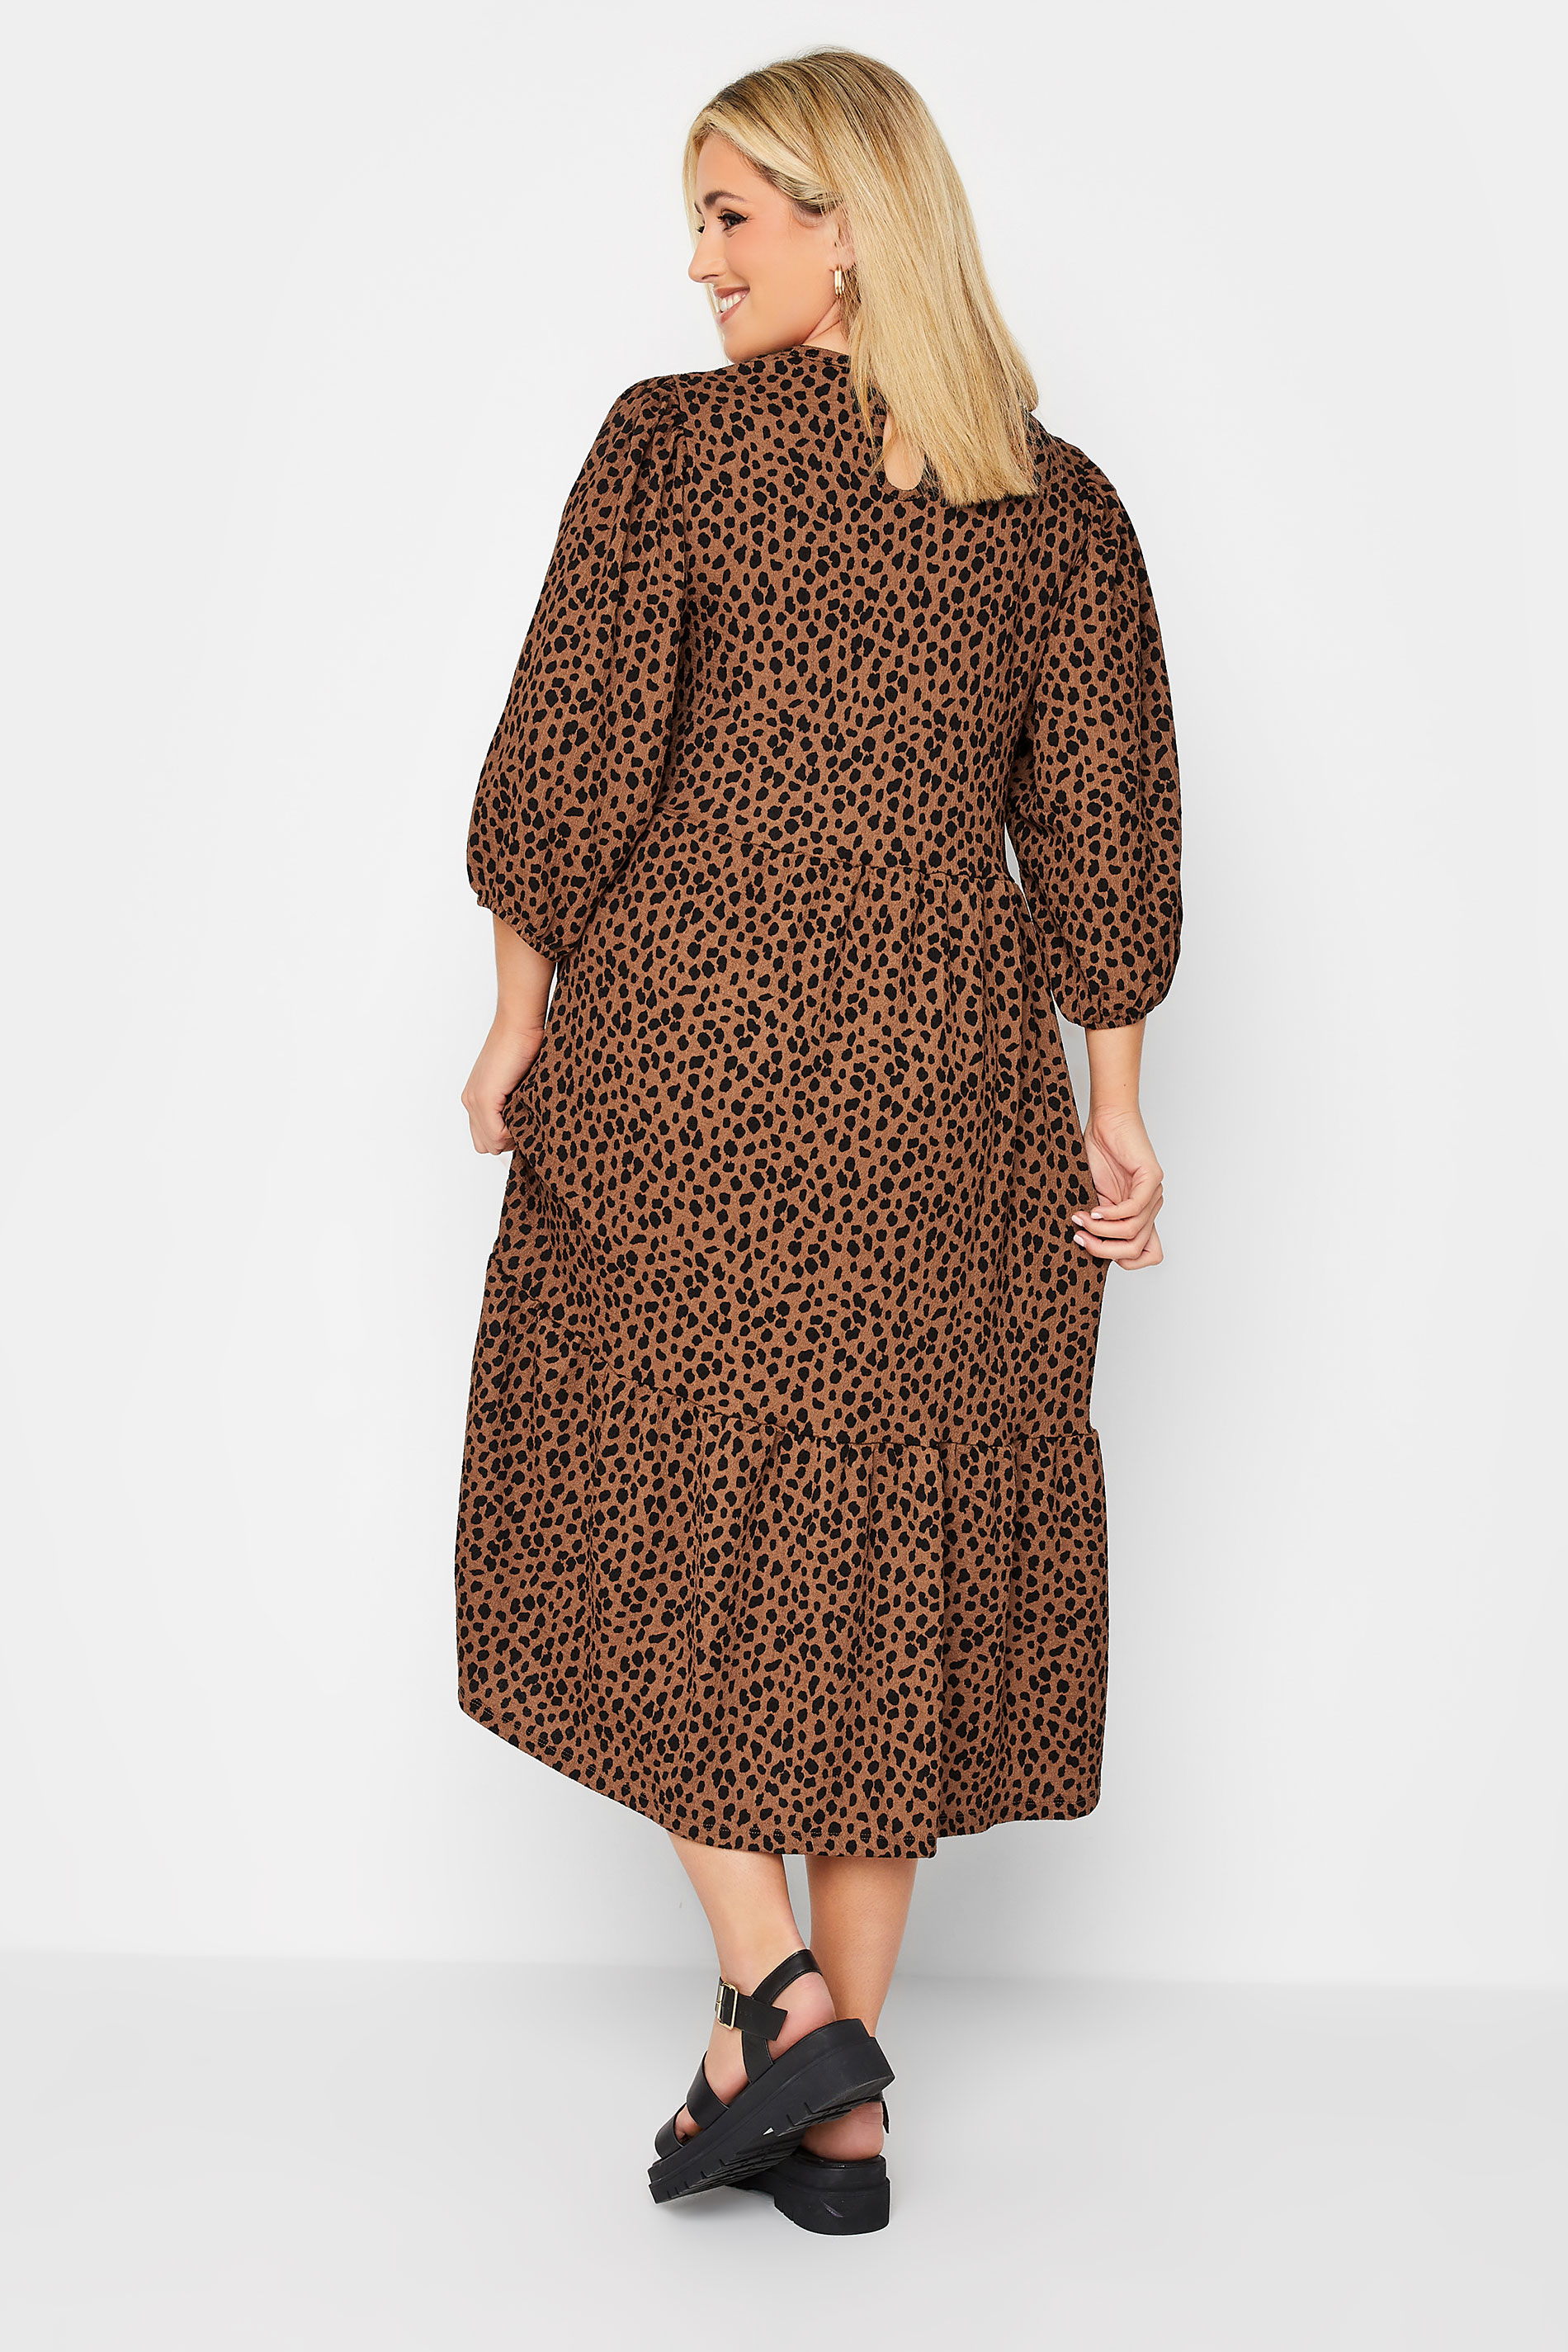 Plus Size Brown & Black Animal Print Frill Midi Dress | Yours Clothing 3